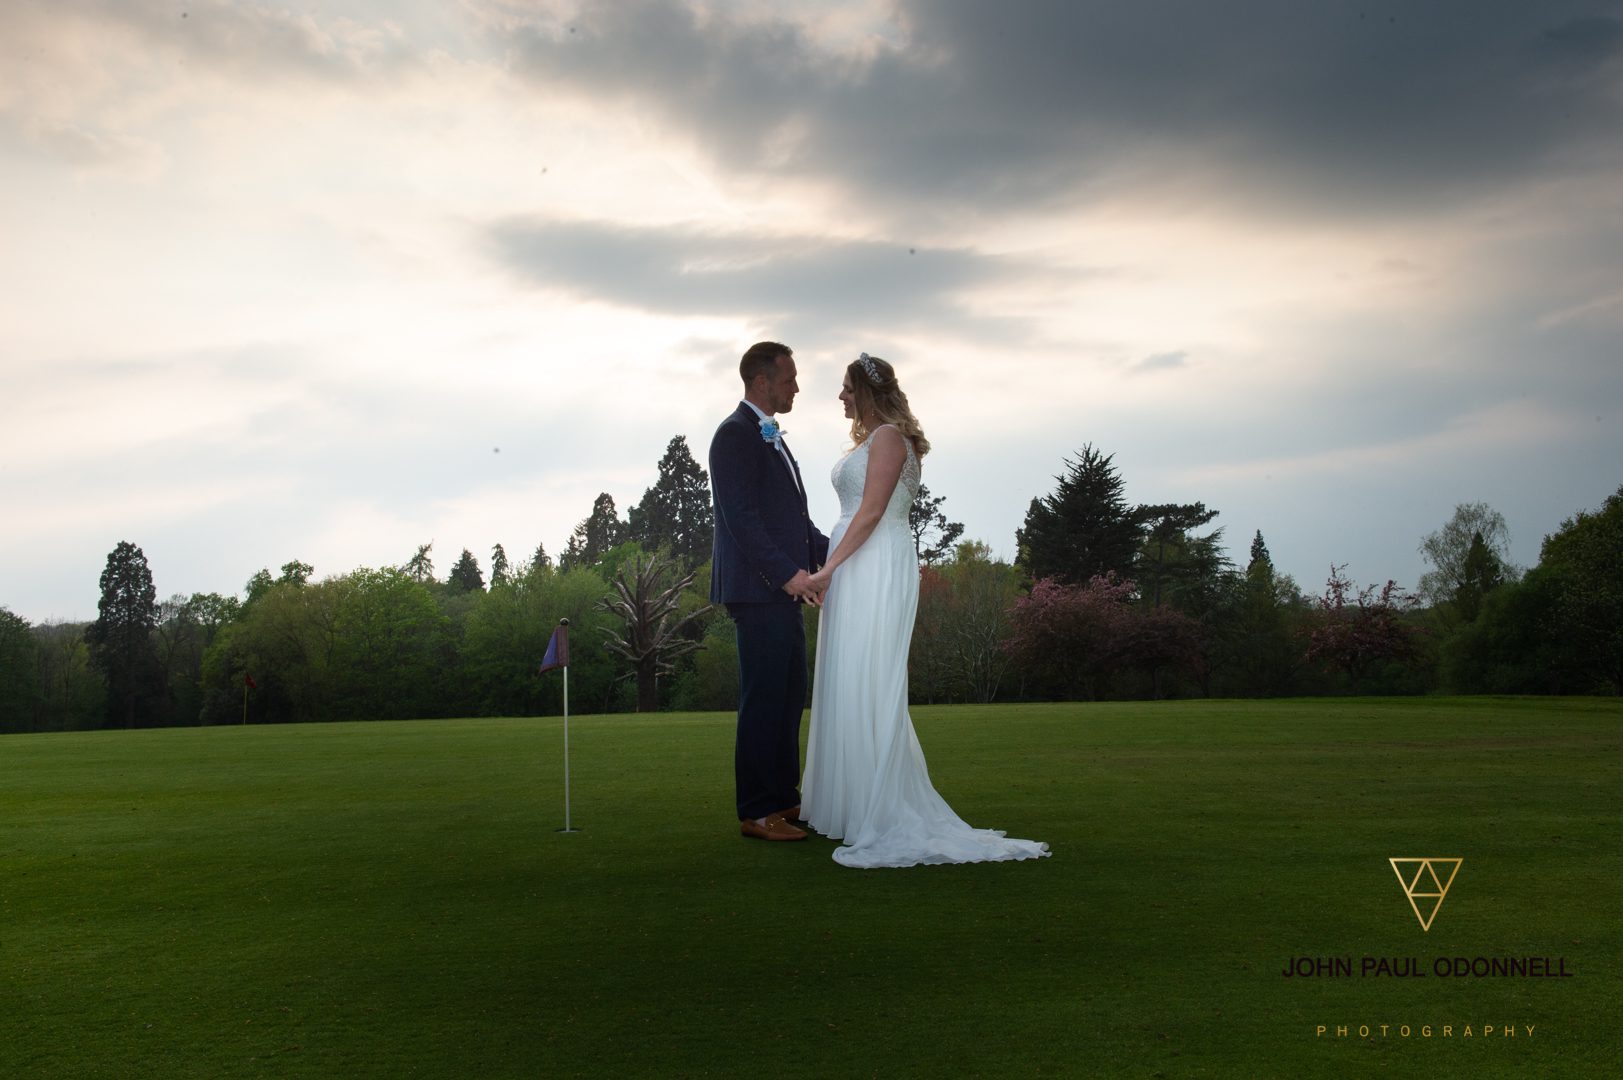 Katie and Daniels Wedding at Brickendon Grange Golf Club